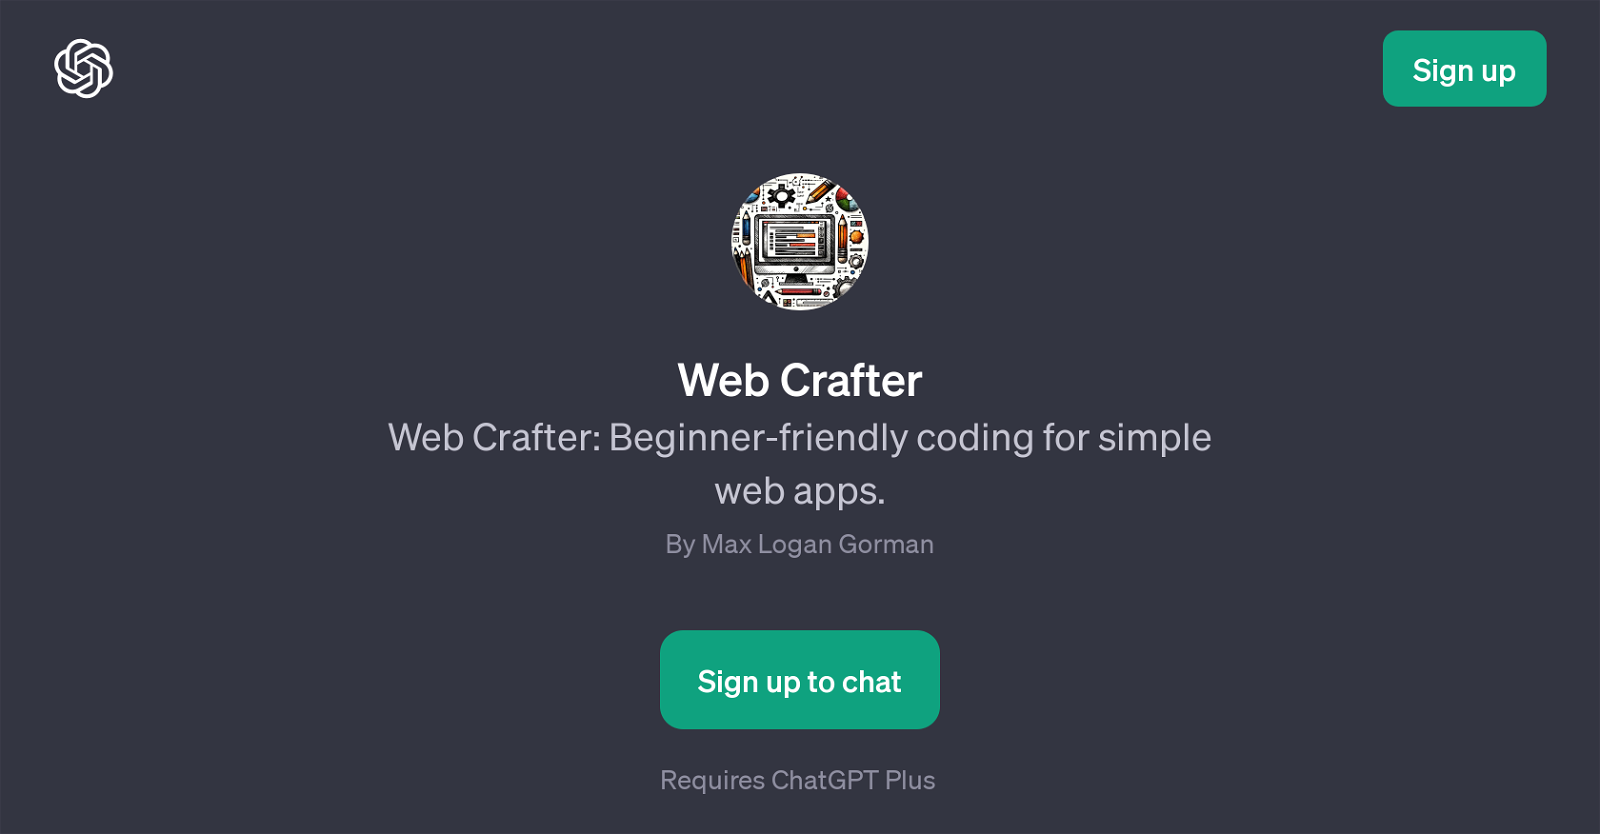 Web Crafter website